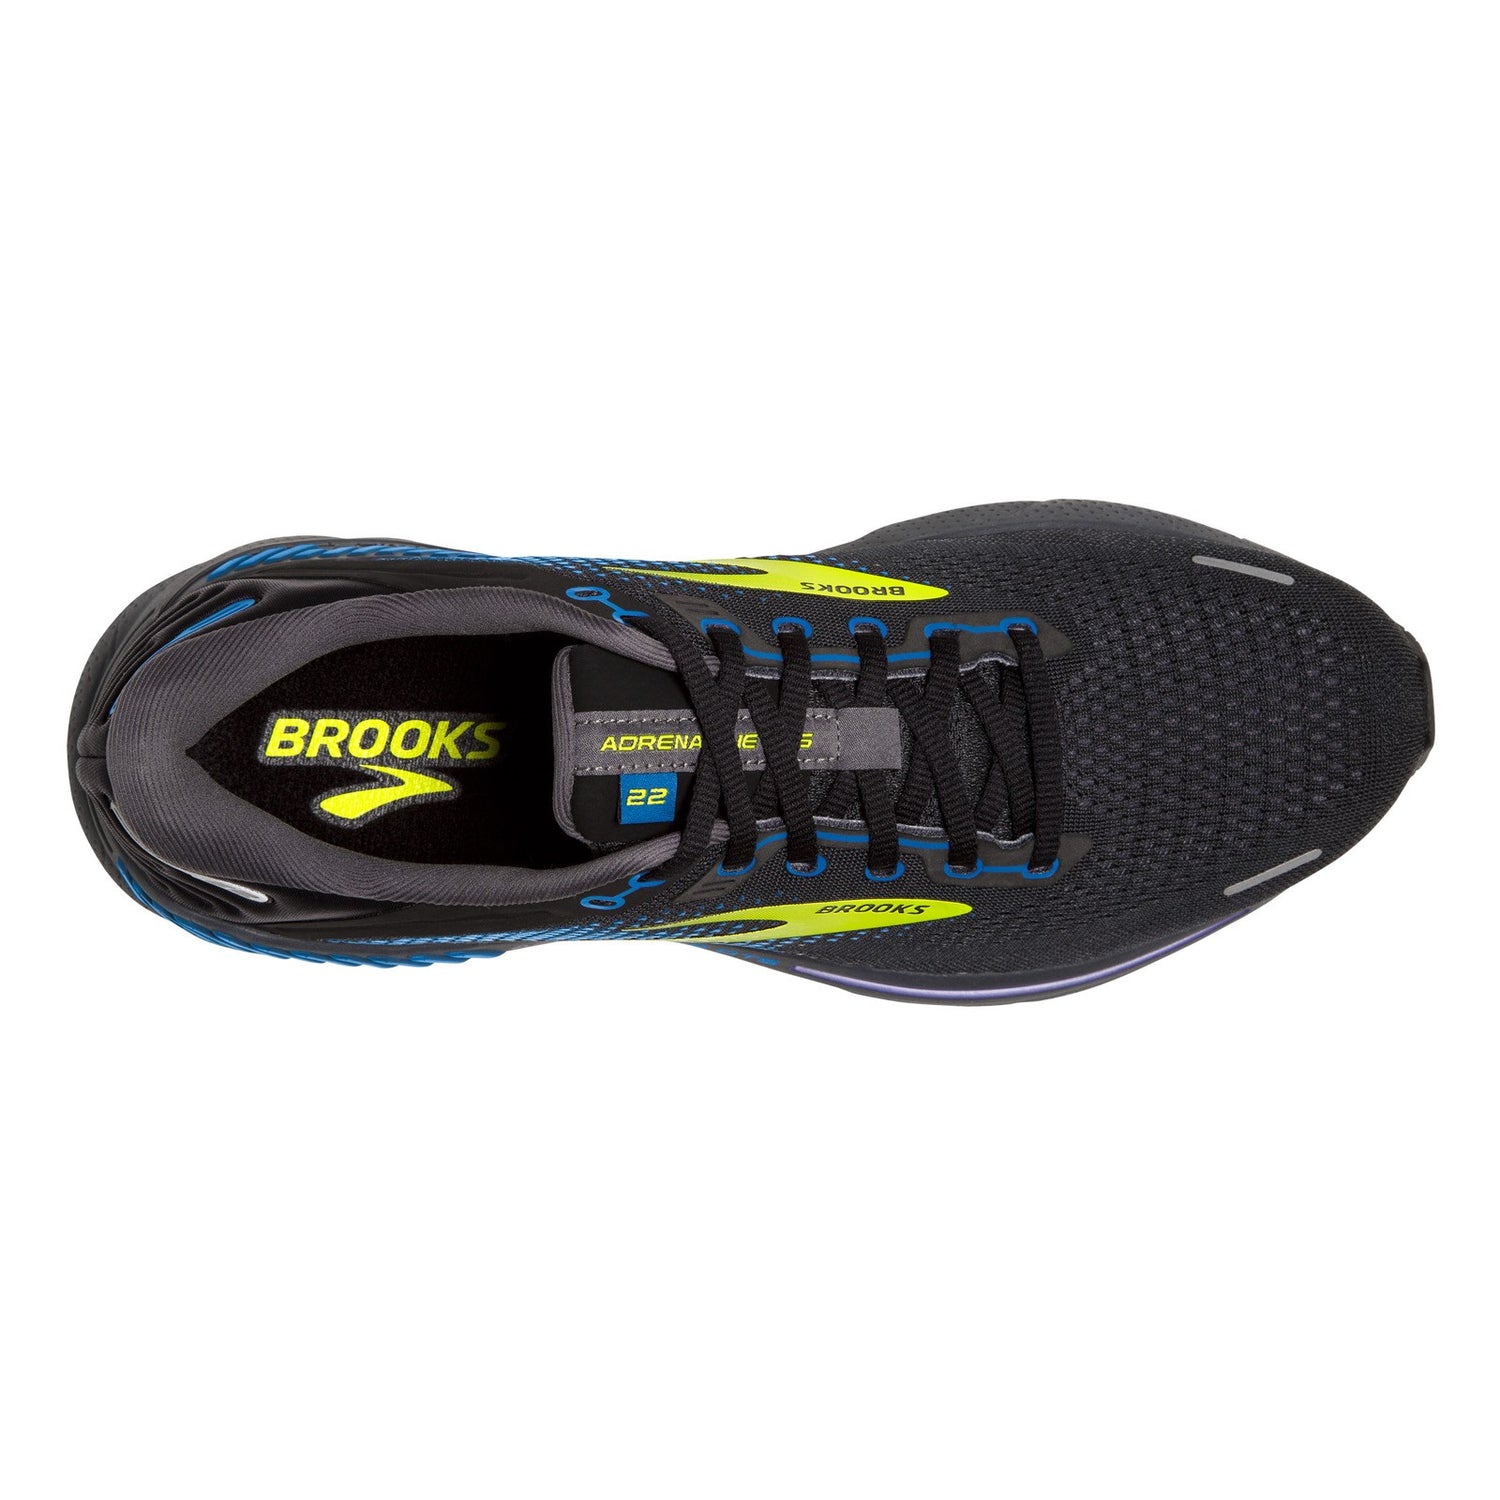 Peltz Shoes  Men's Brooks Adrenaline GTS 22 Running Shoe Black/Blue/Nightlife 110366 1D 069